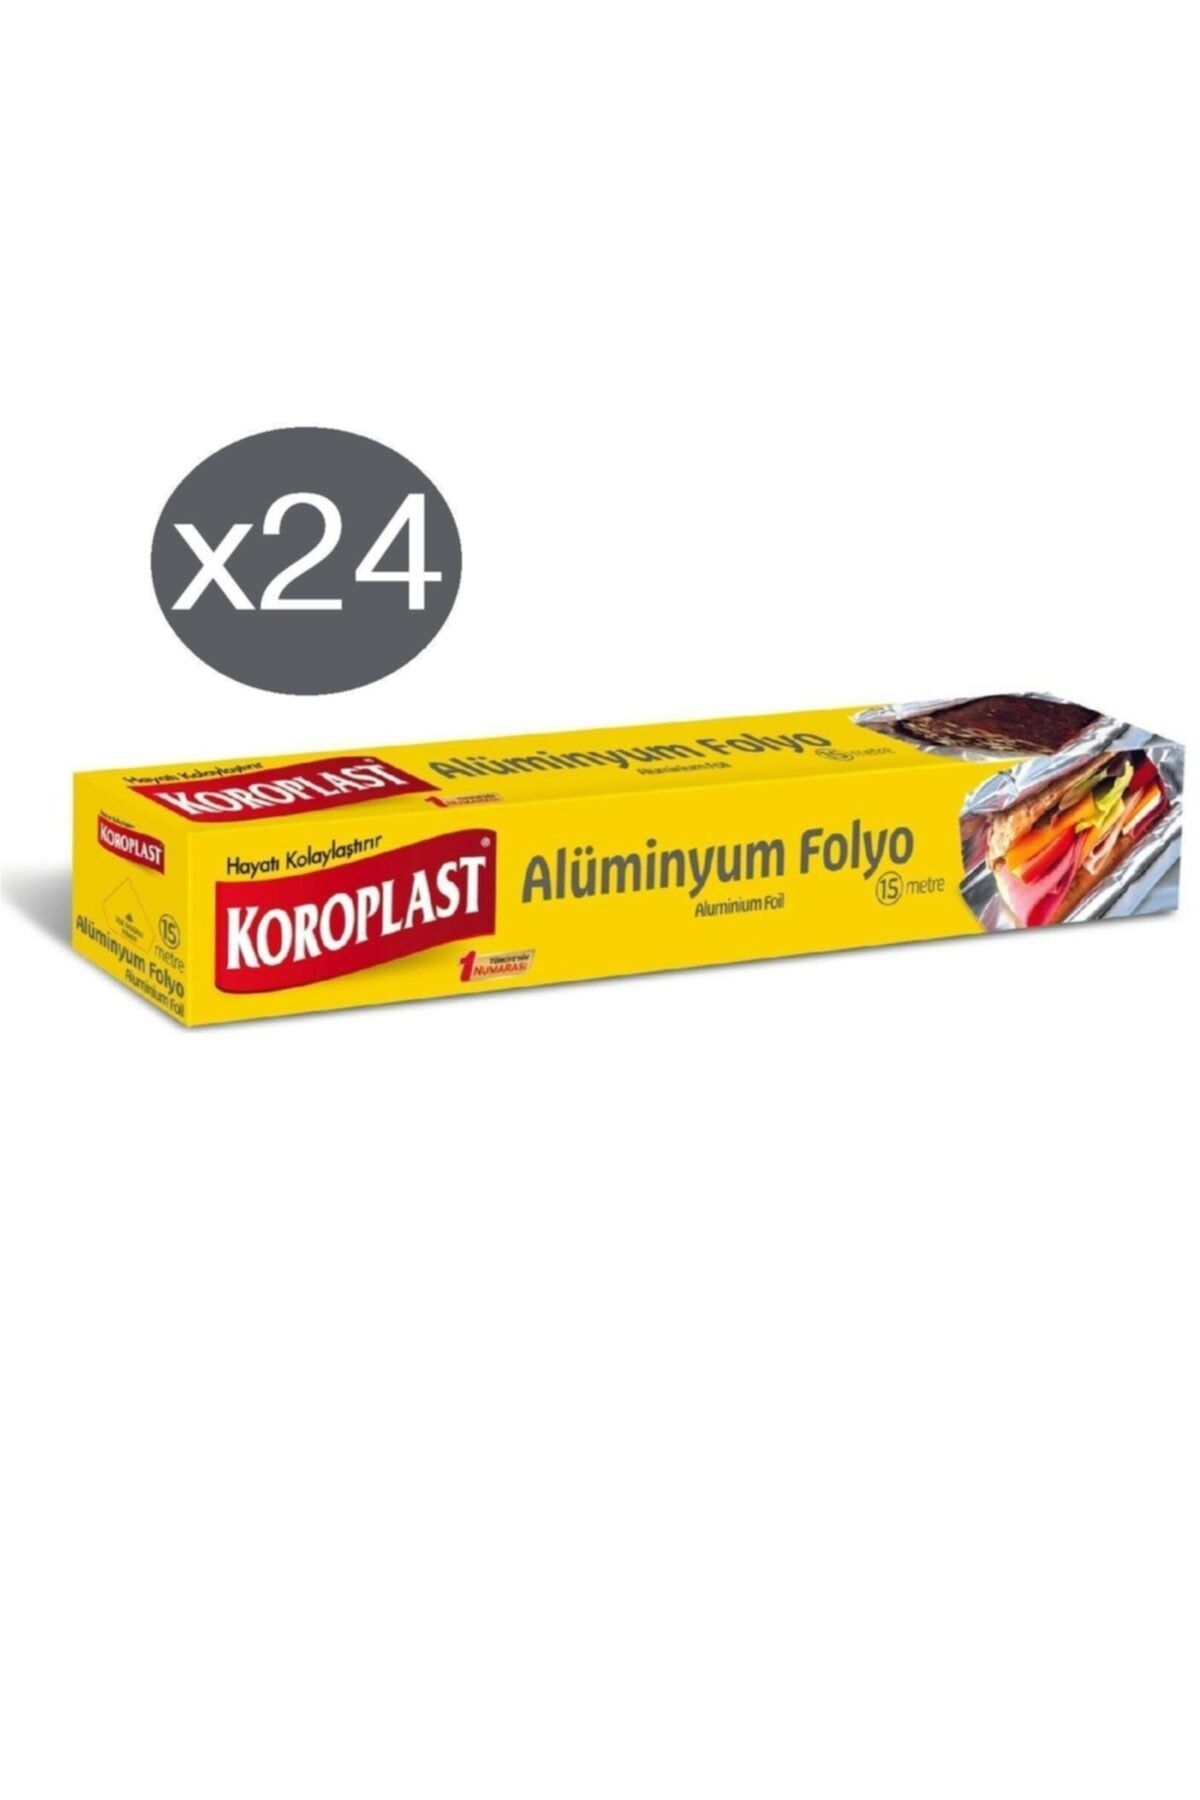 Koroplast Alüminyum Folyo 15 Metre X 24 Paket (30cm*15m)